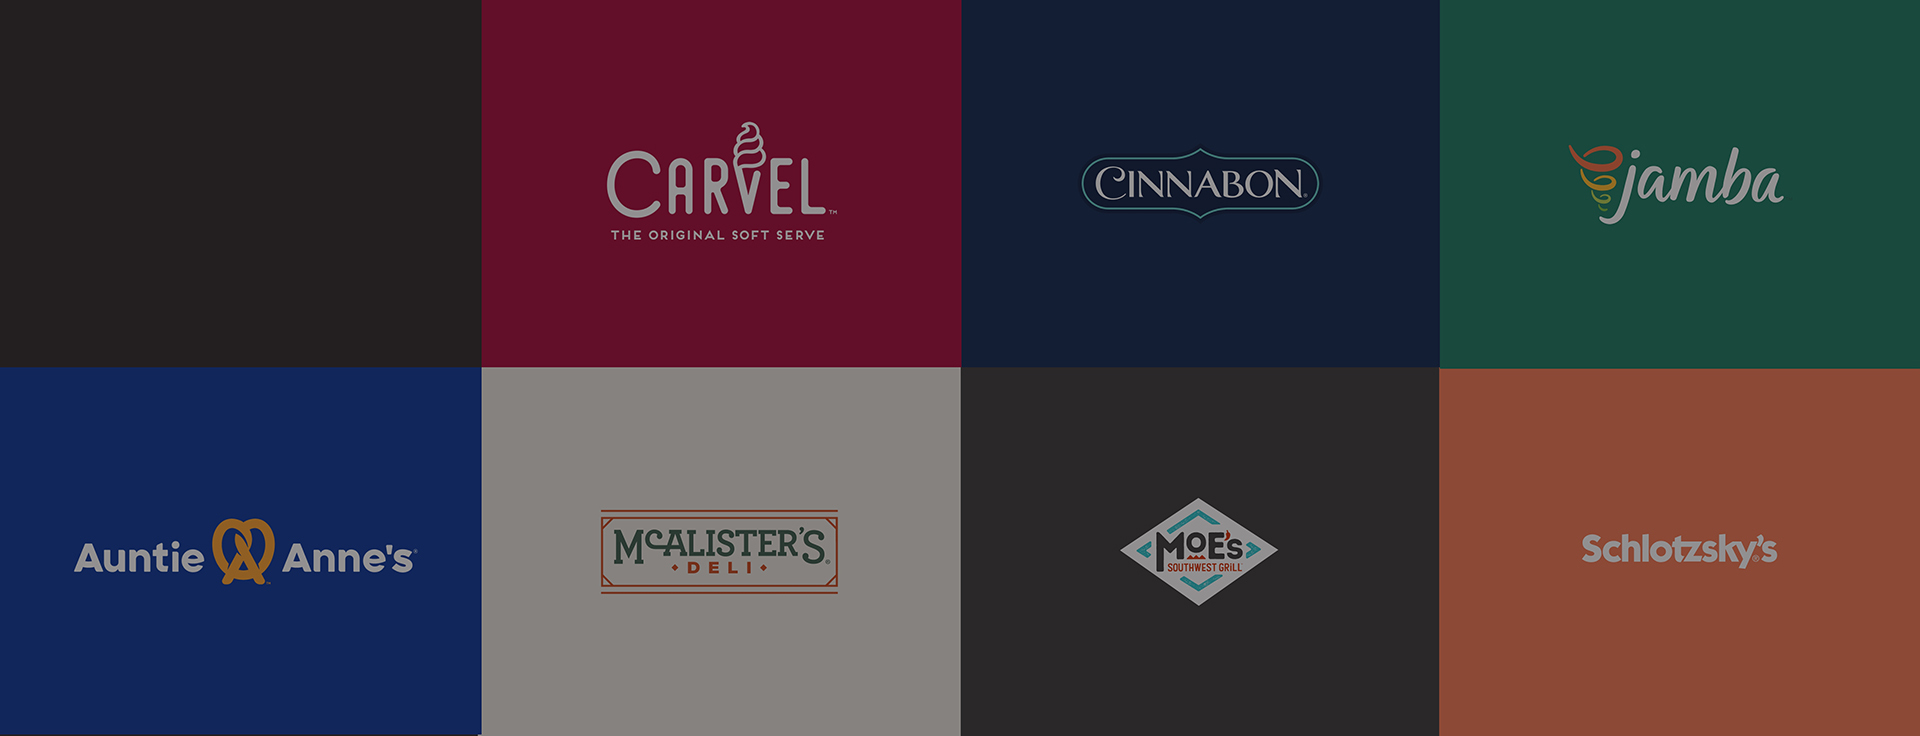 FOCUS Brands logos